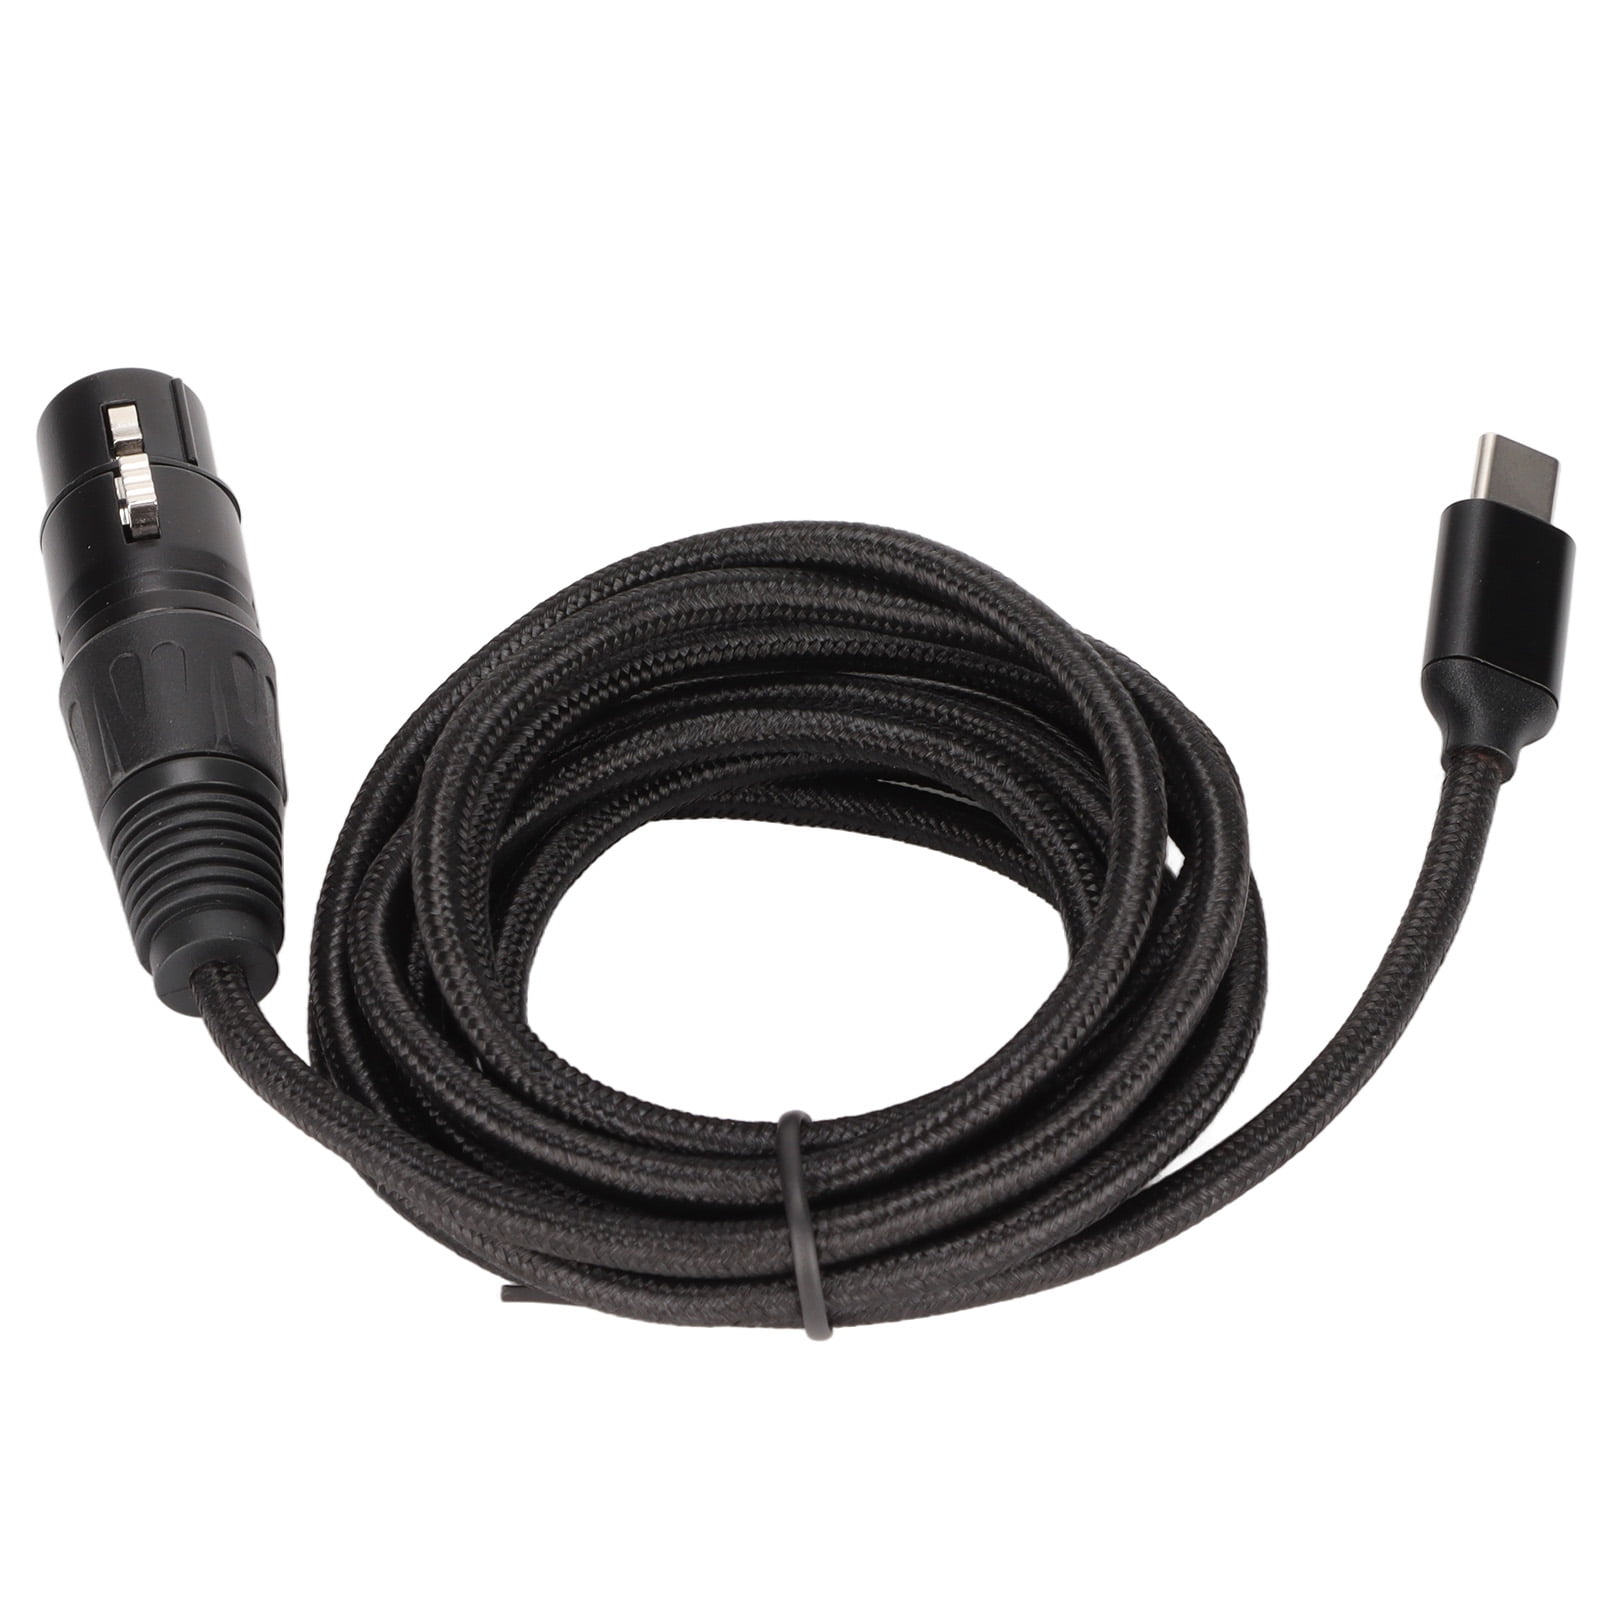 LAFGUR USB C to XLR Connector,USB C to XLR Female Cable